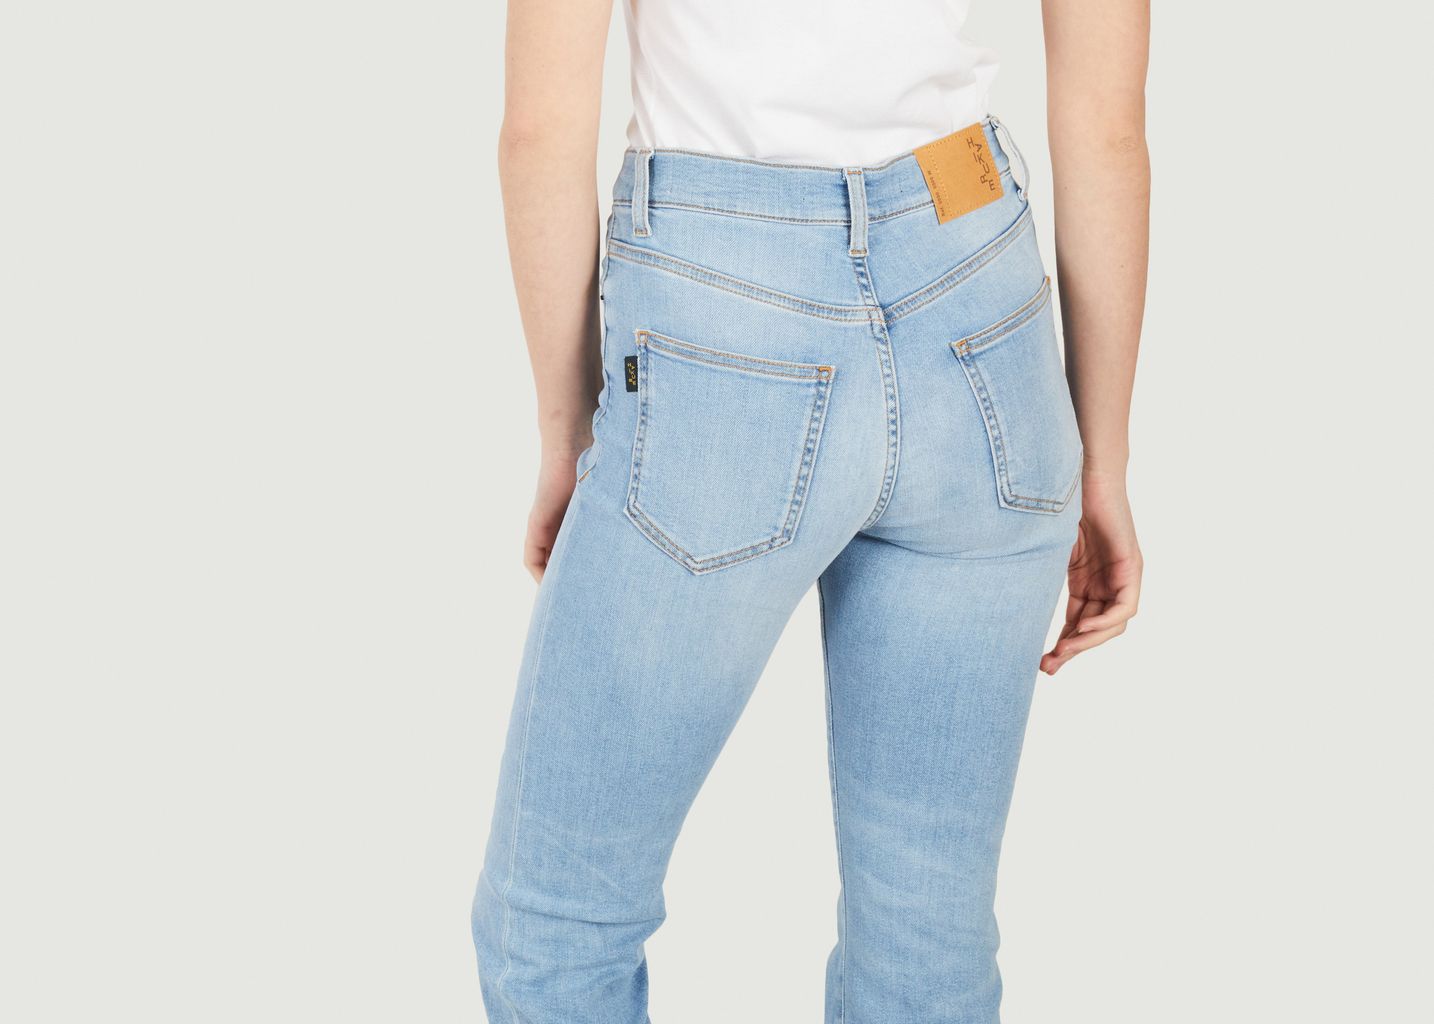 Formentera jeans - haikure